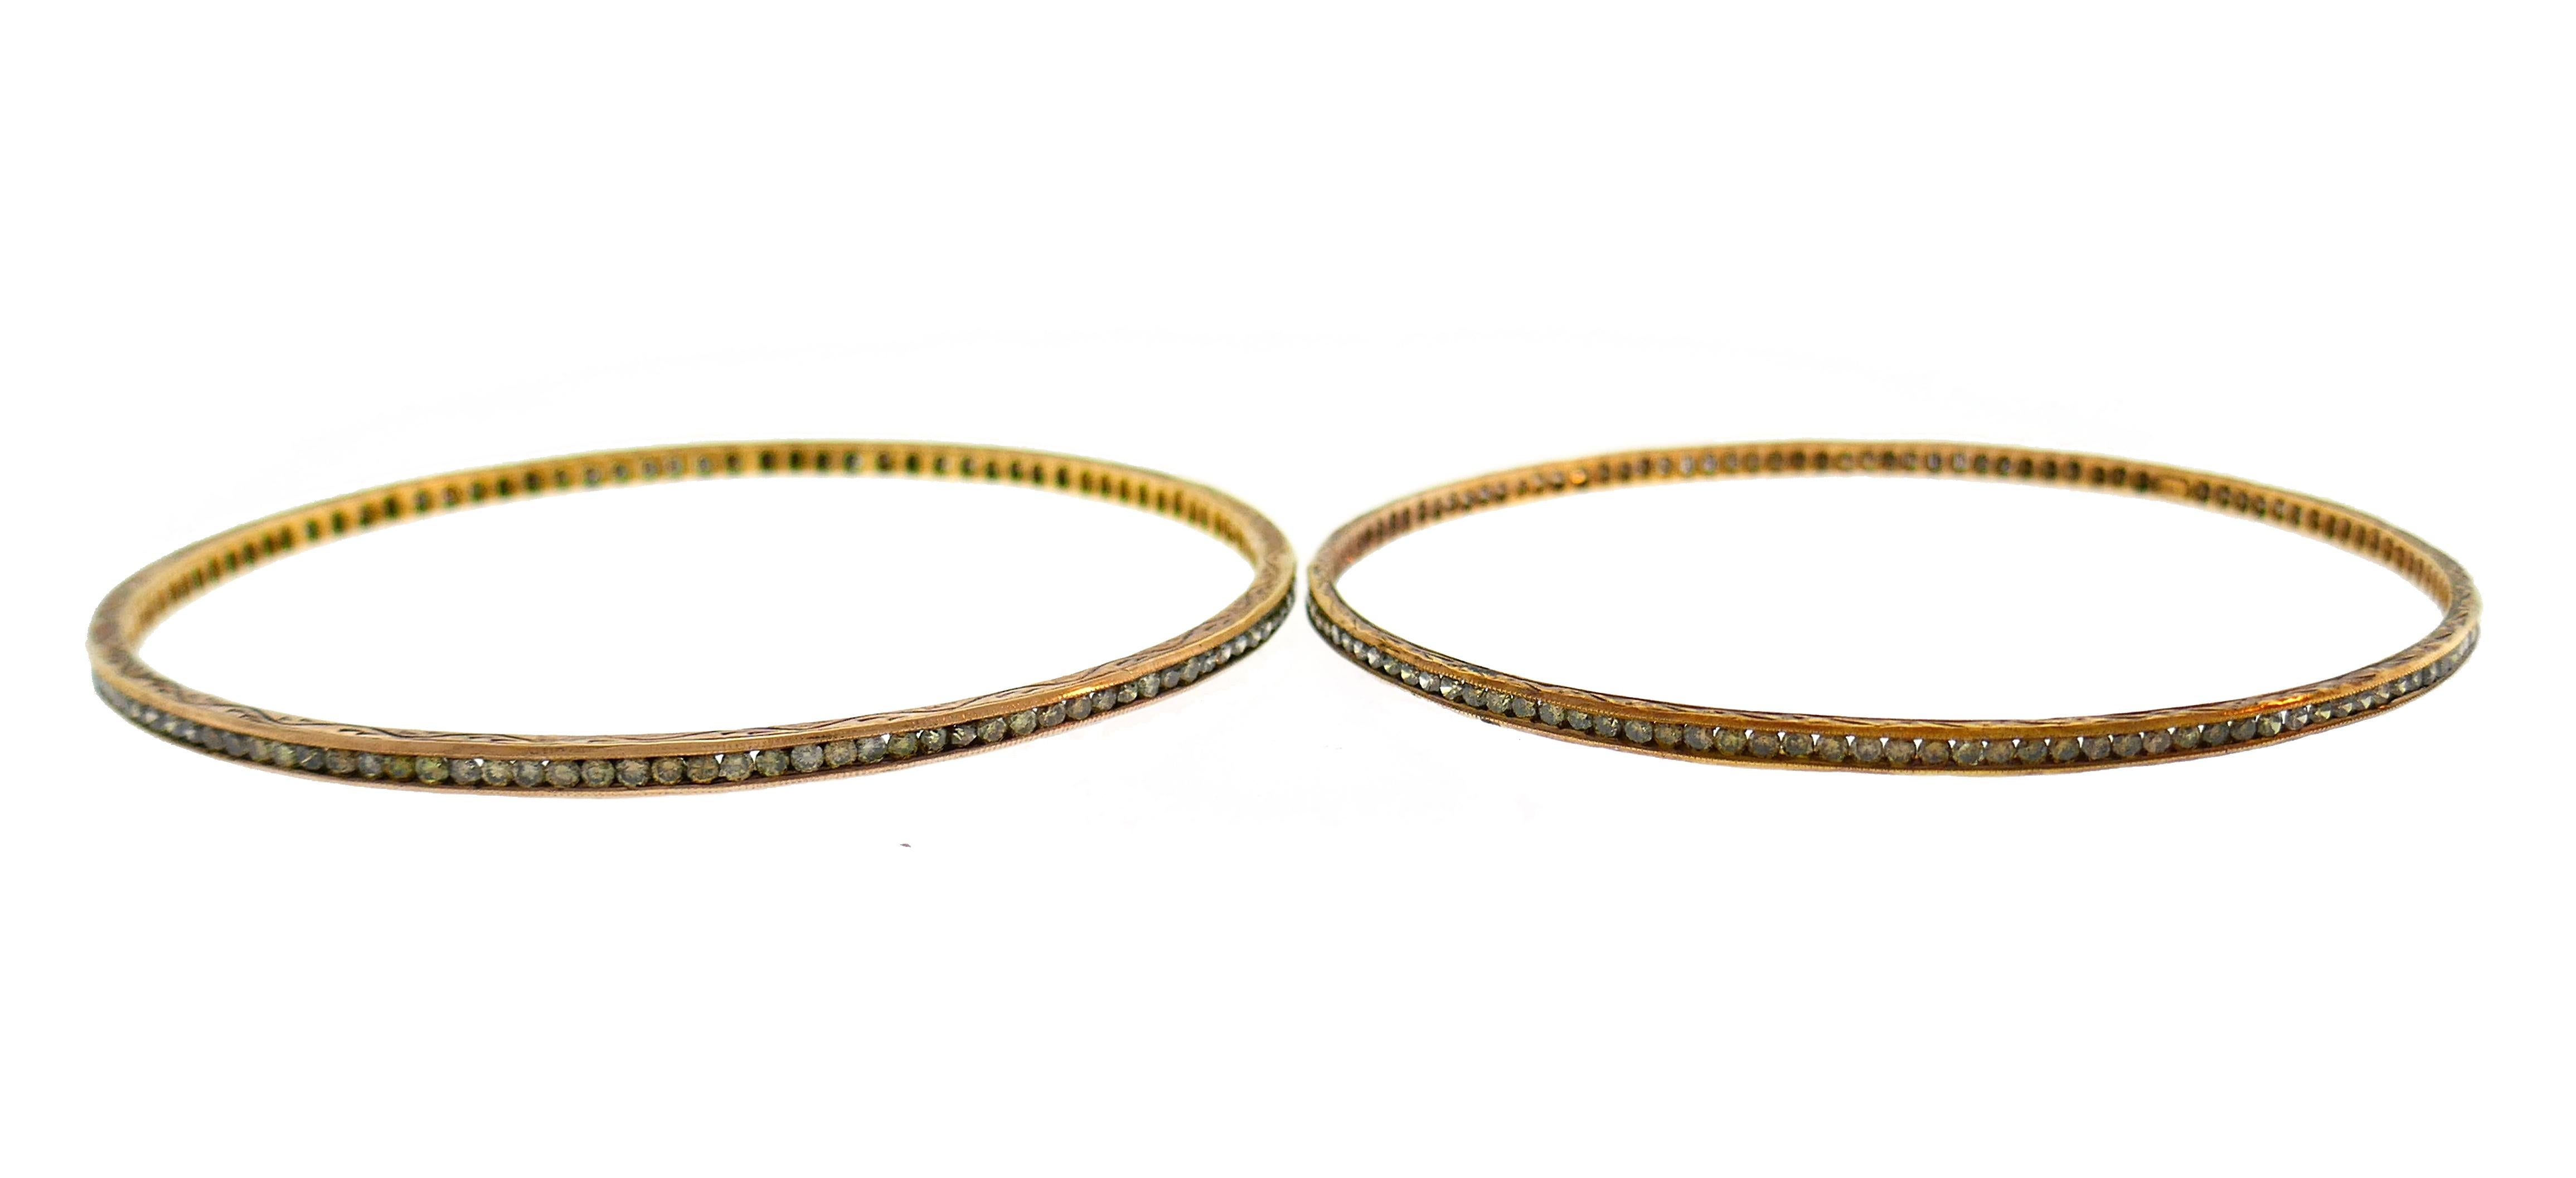 Cynthia Bach Diamond Rose Gold Bangle Bracelet, Pair For Sale 2